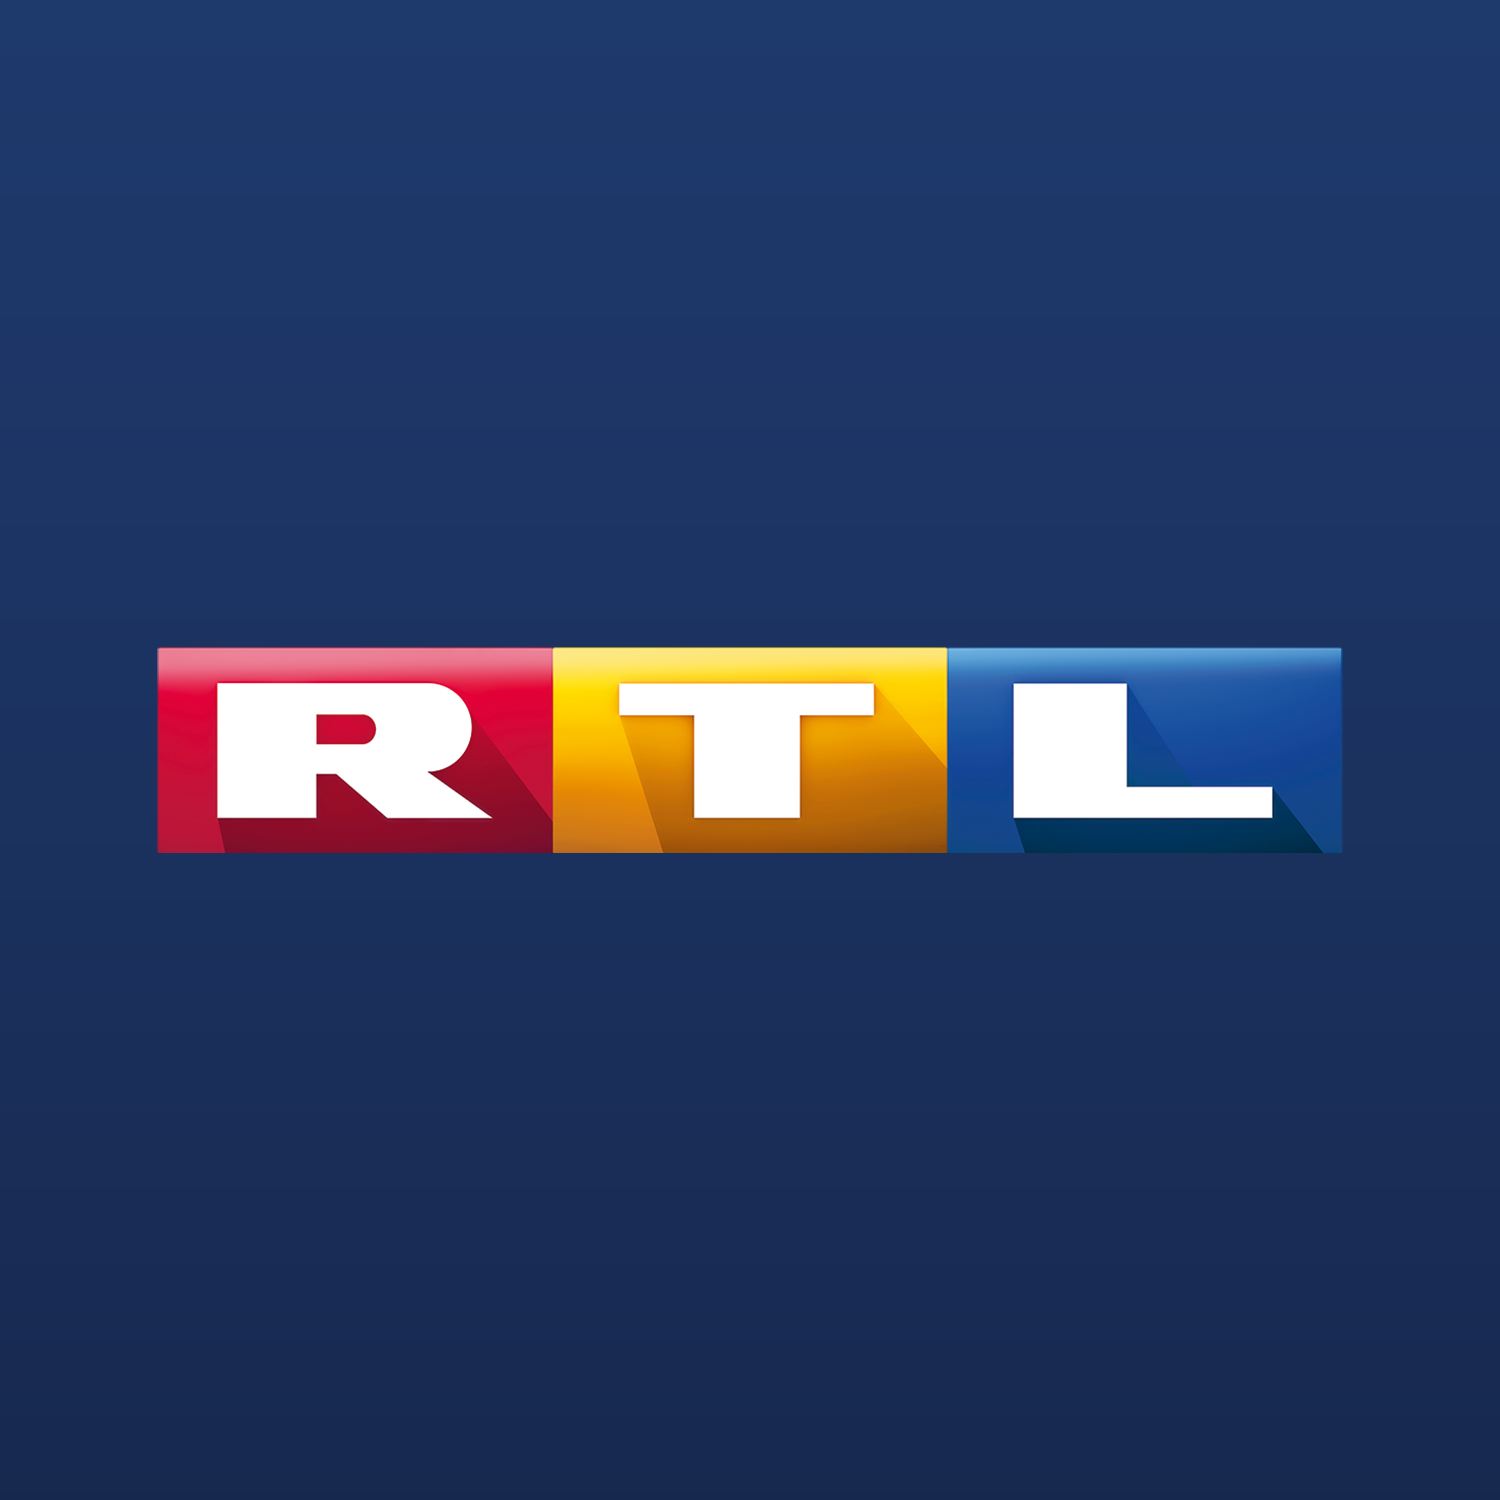 Rtl Television